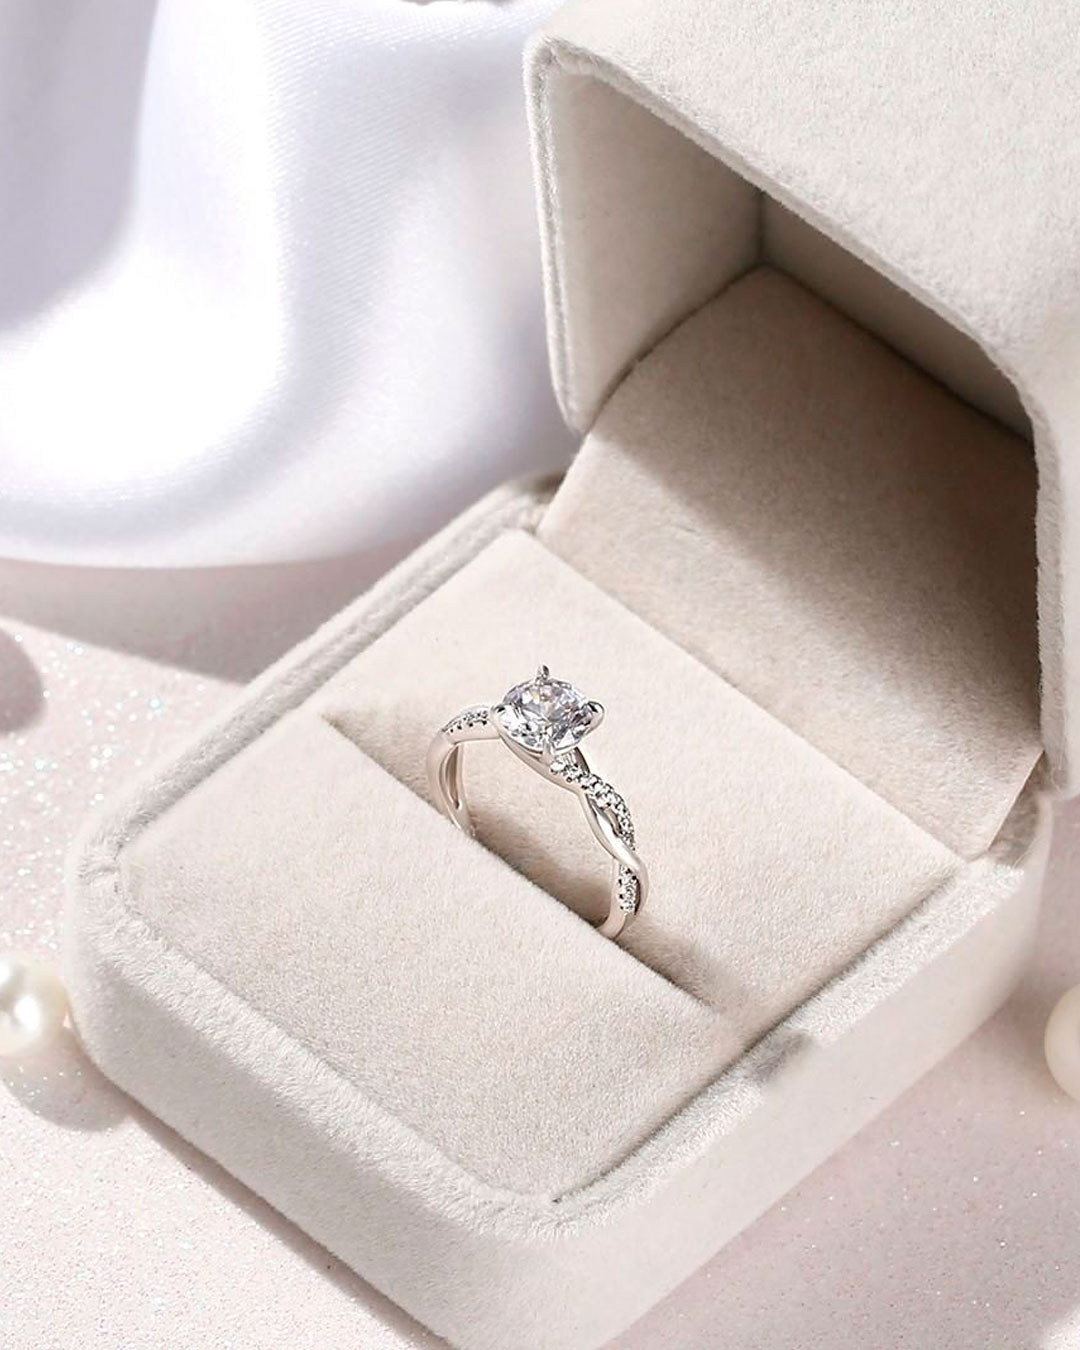 average price of wedding ring band crystals